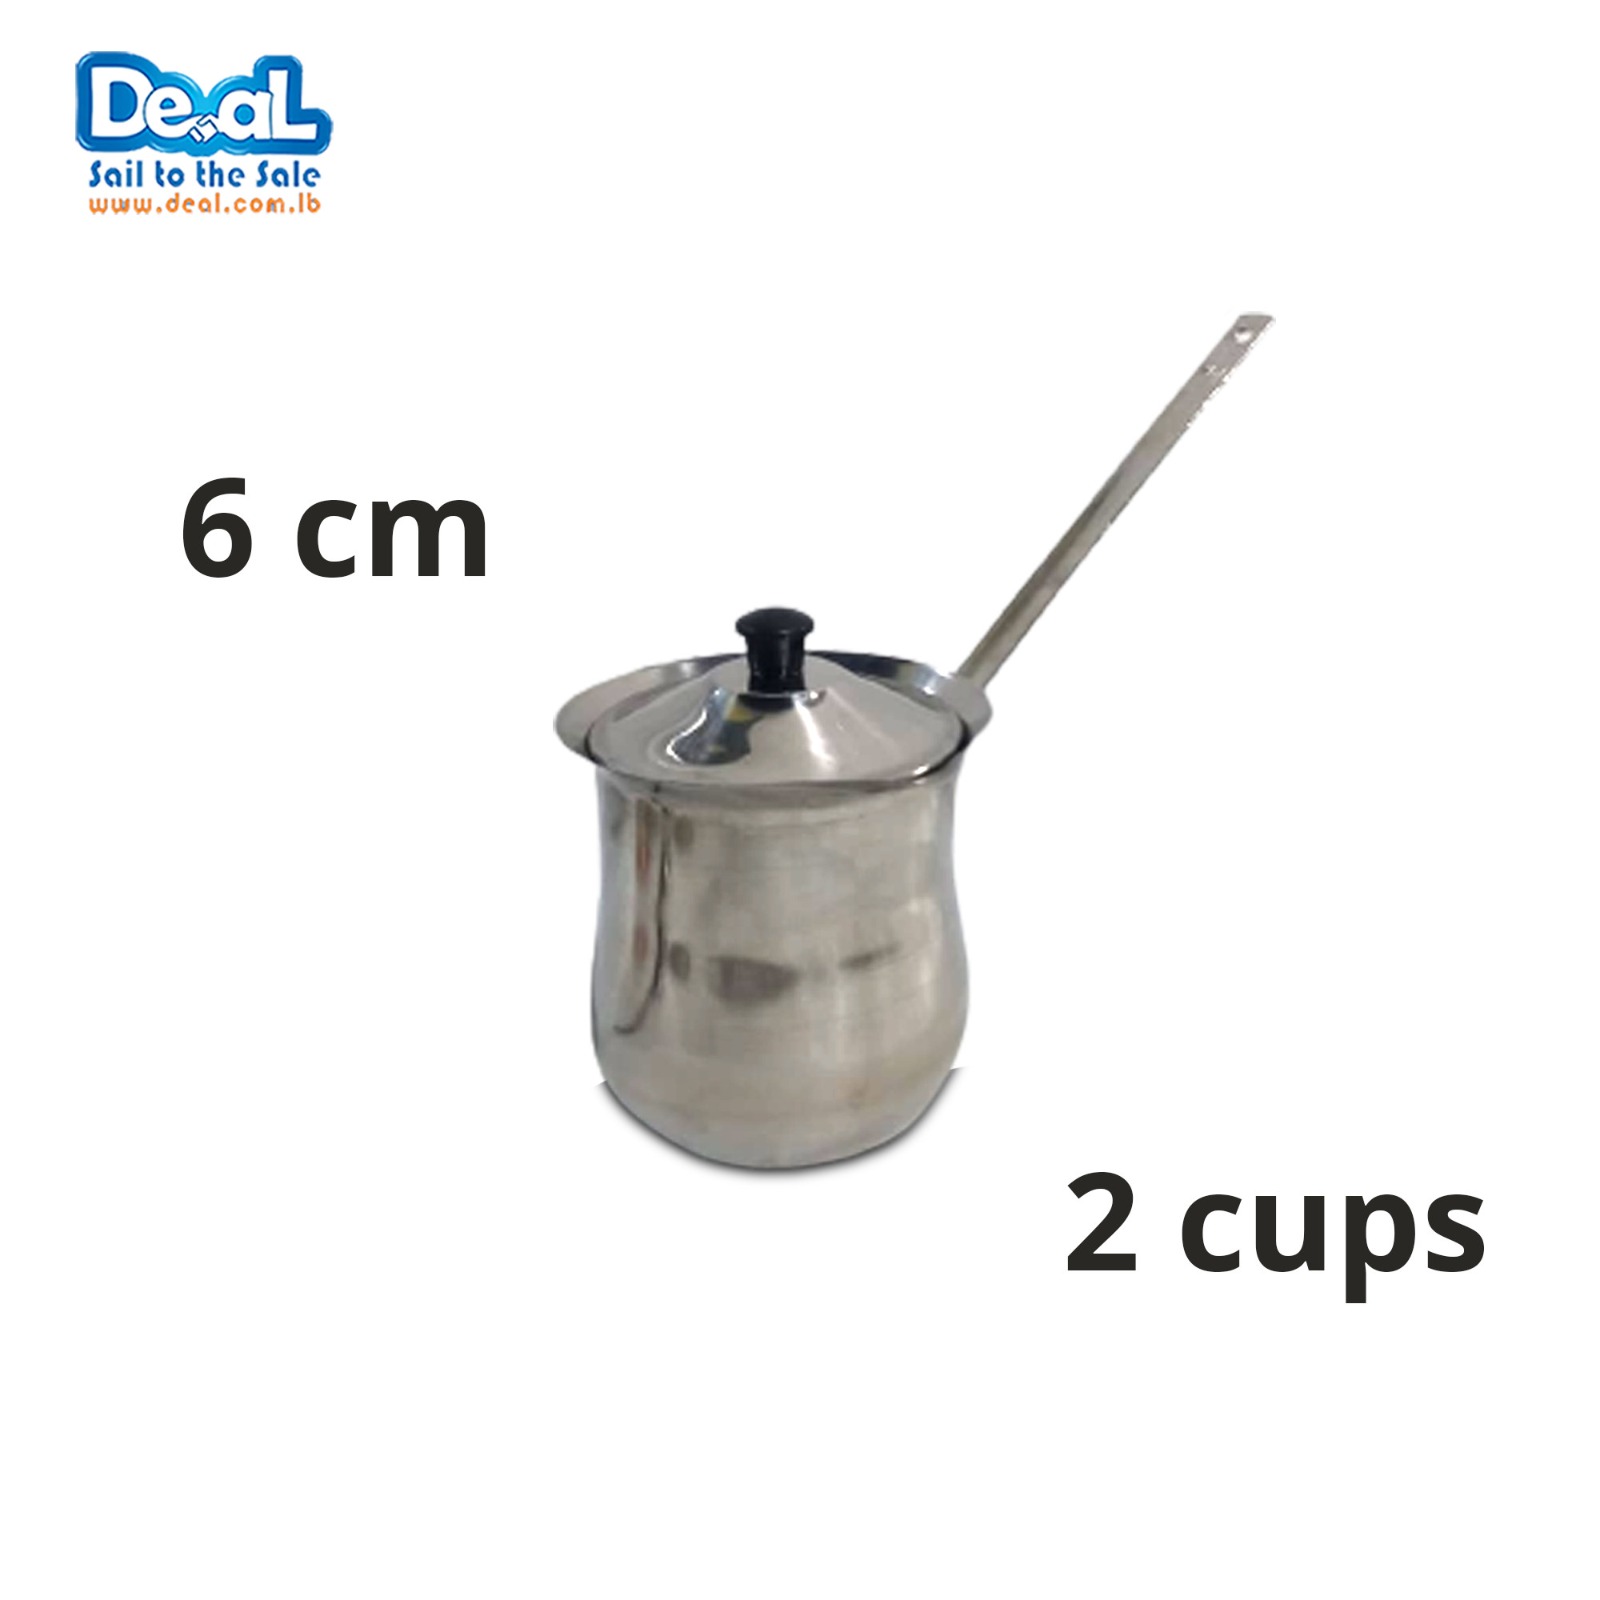 Turkish Coffee Pot Stainless Steel 6 CM